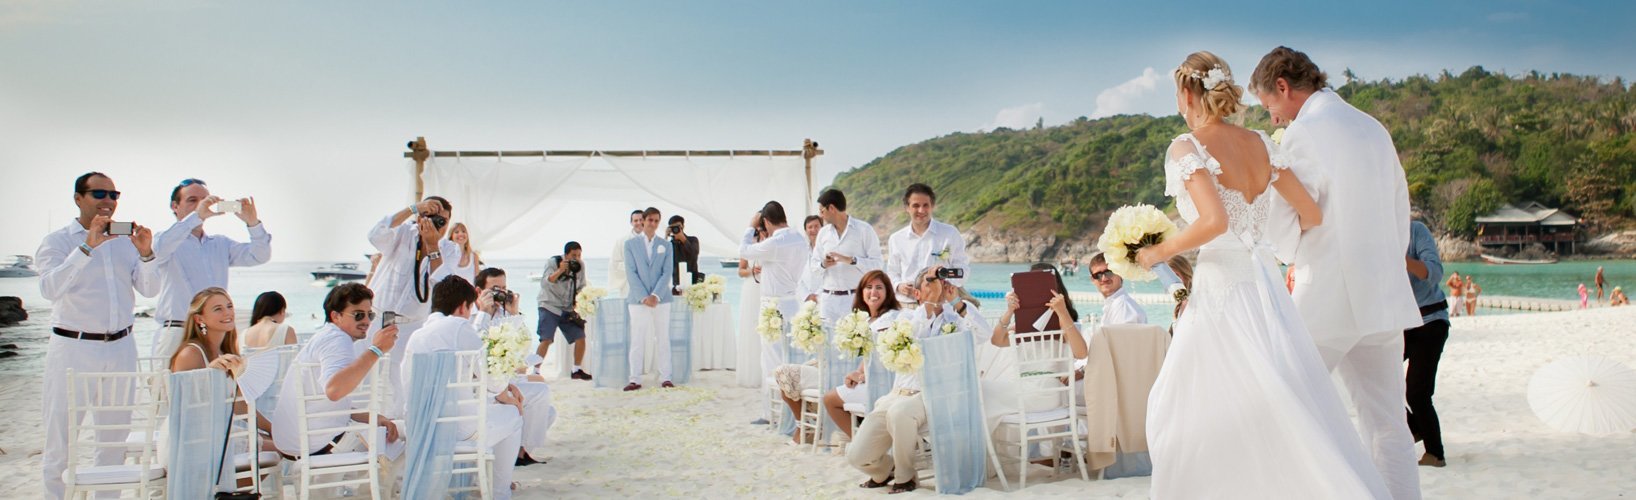 Why should I choose a Beach Wedding overseas?